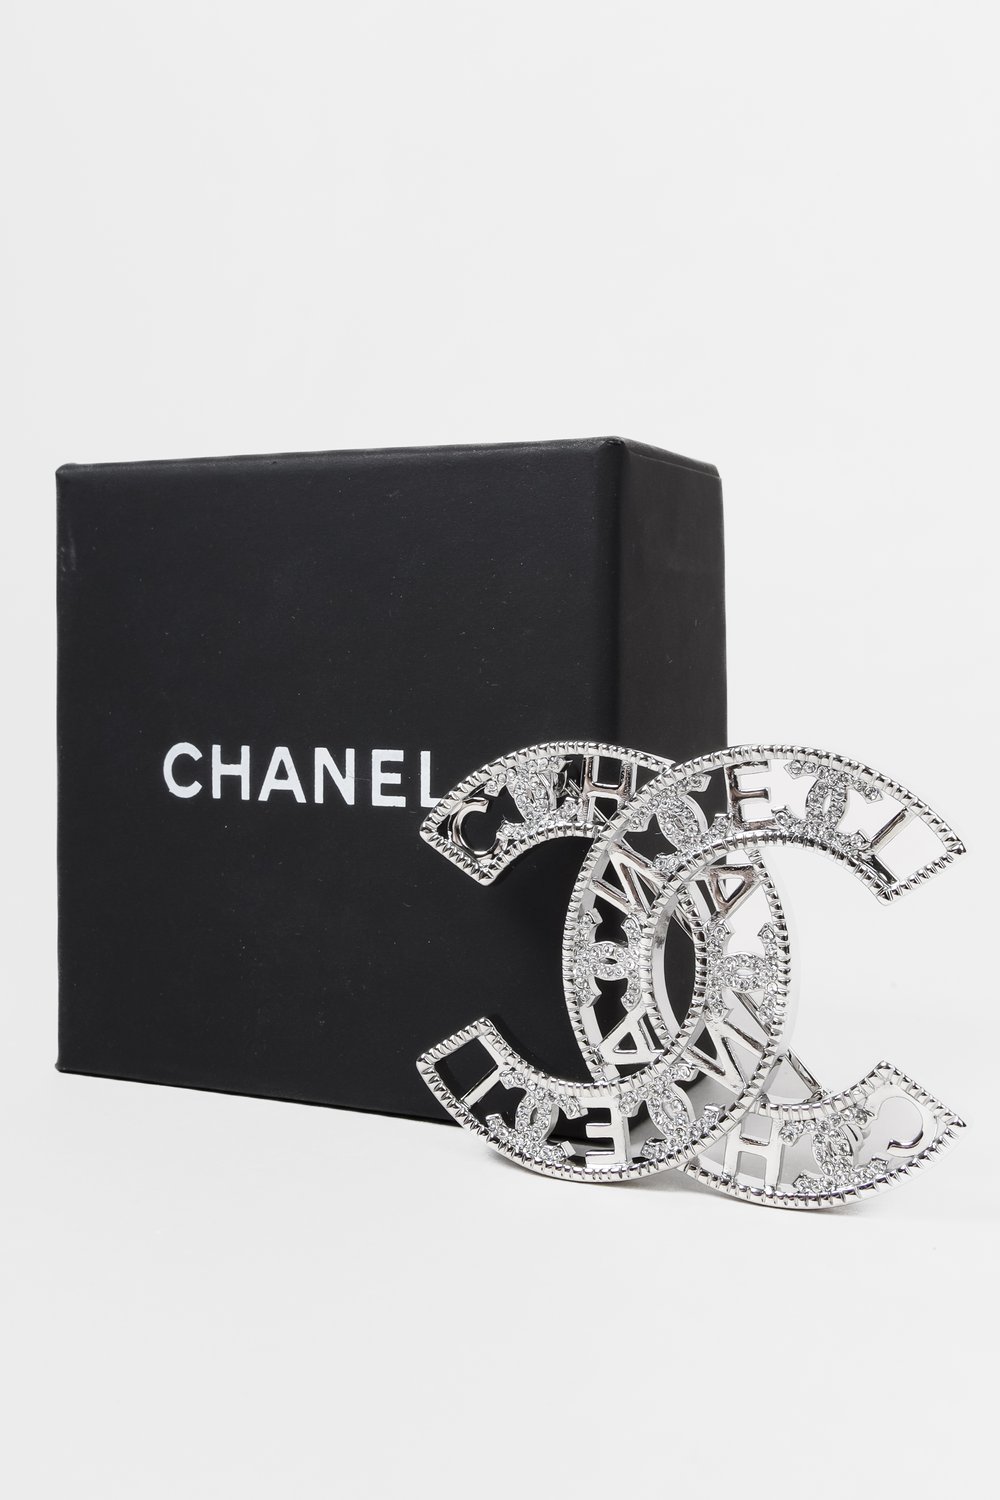 Chanel Blue Enamel and Metal Beaded CC Four-Leaf Clover Brooch